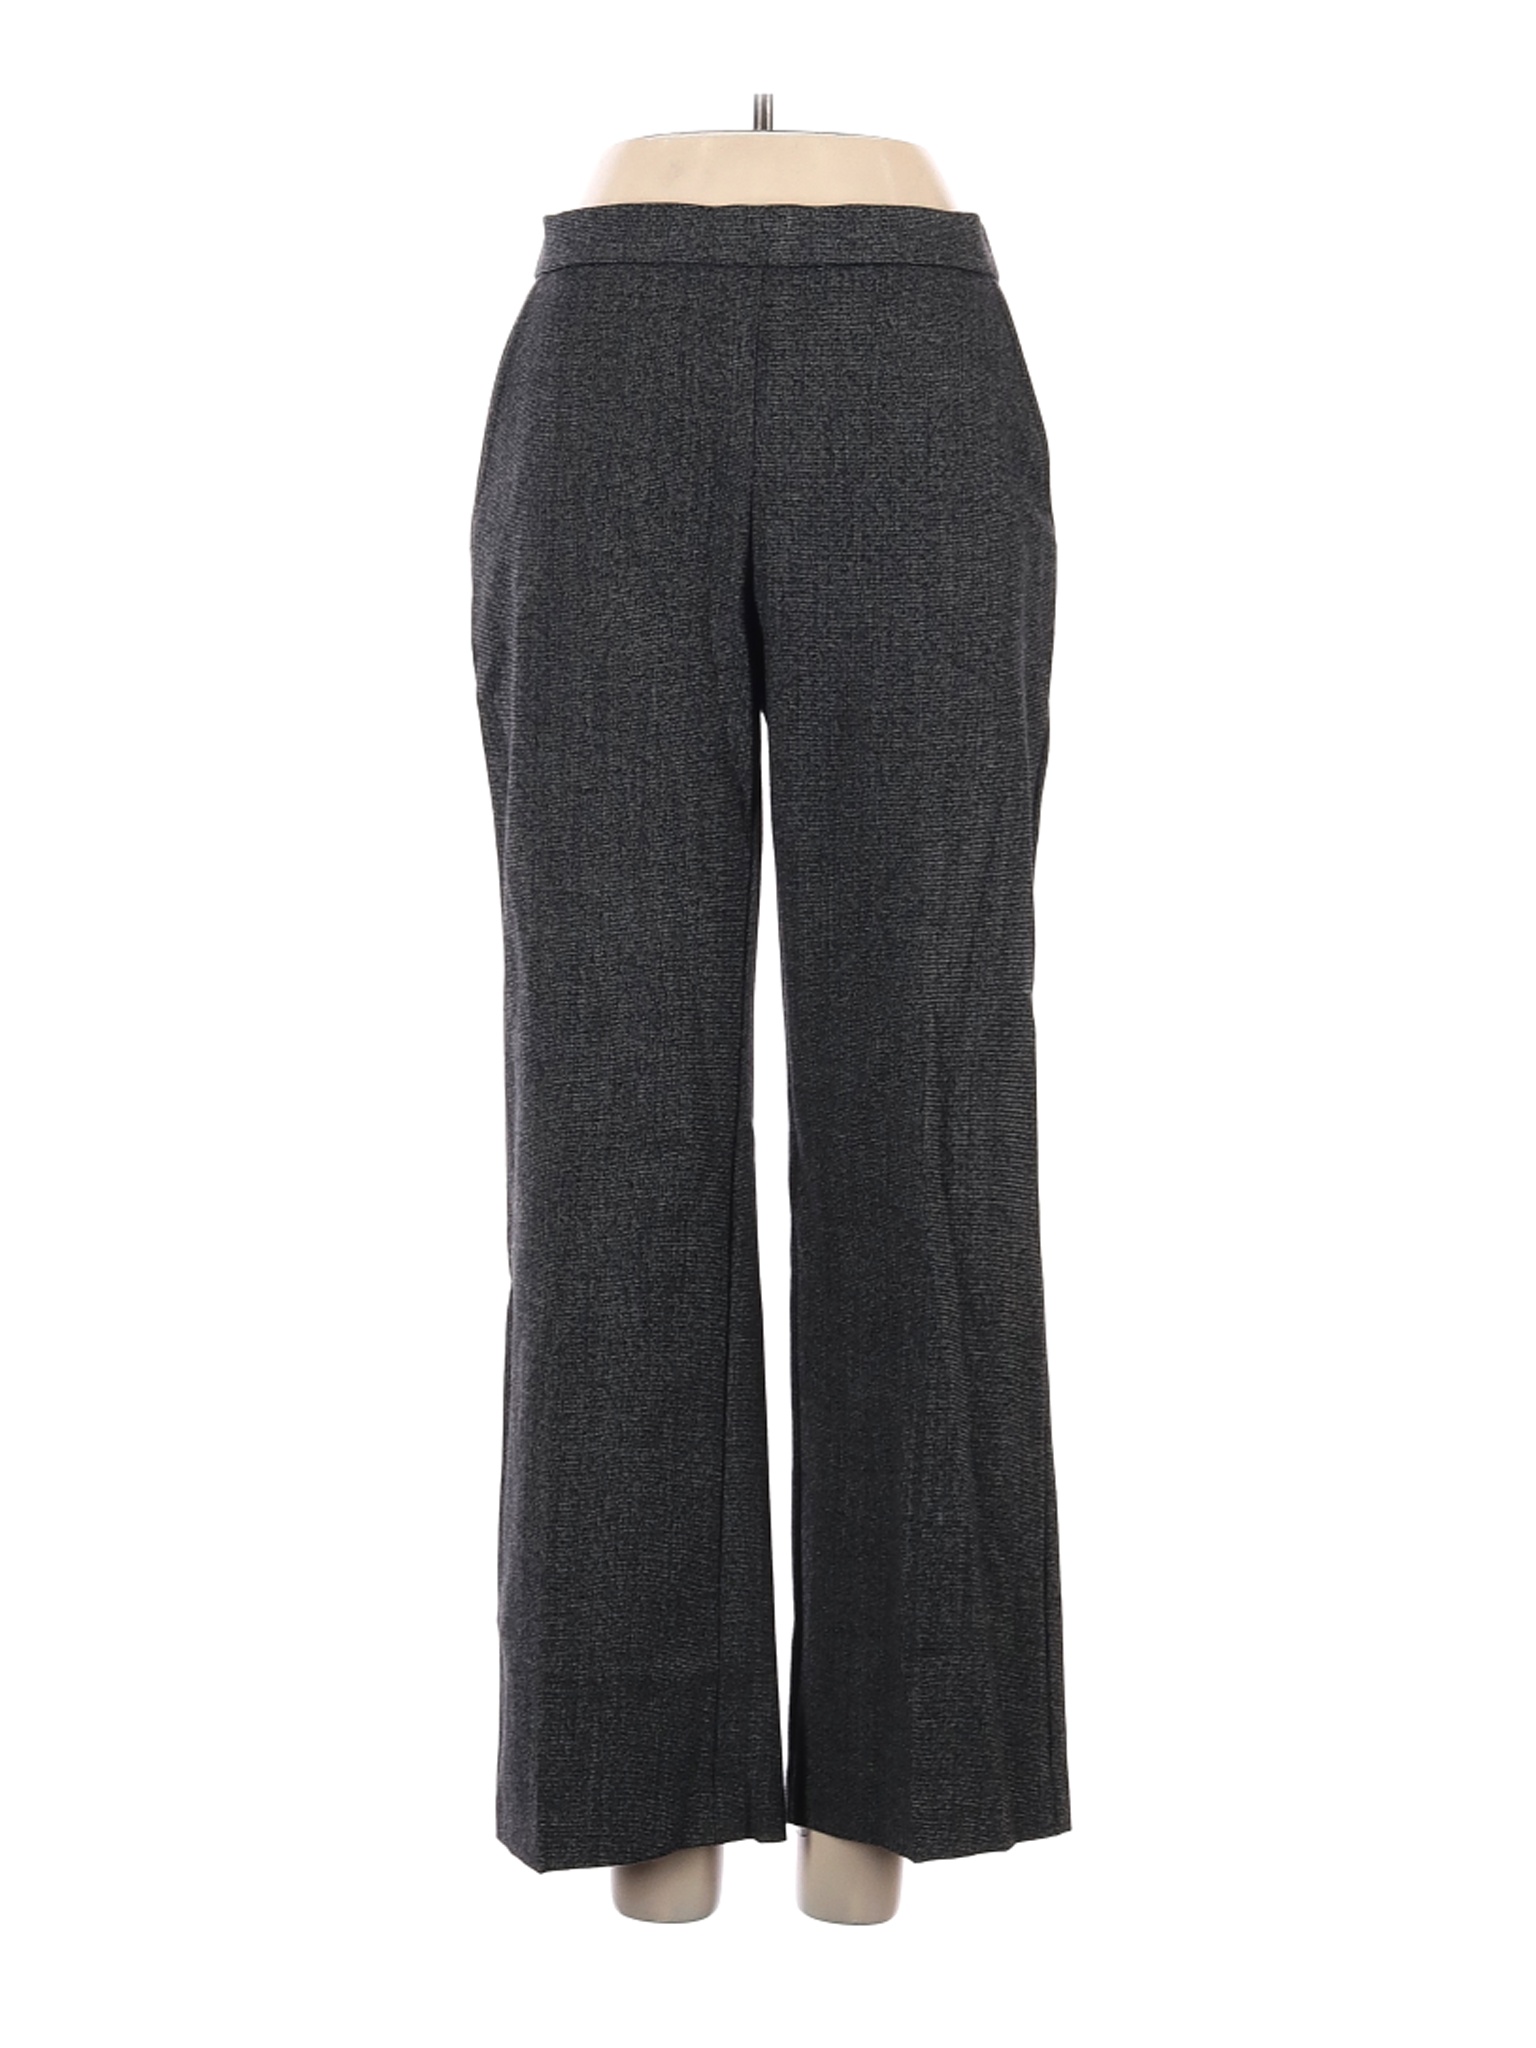 Sag Harbor Women Gray Casual Pants 4 | eBay